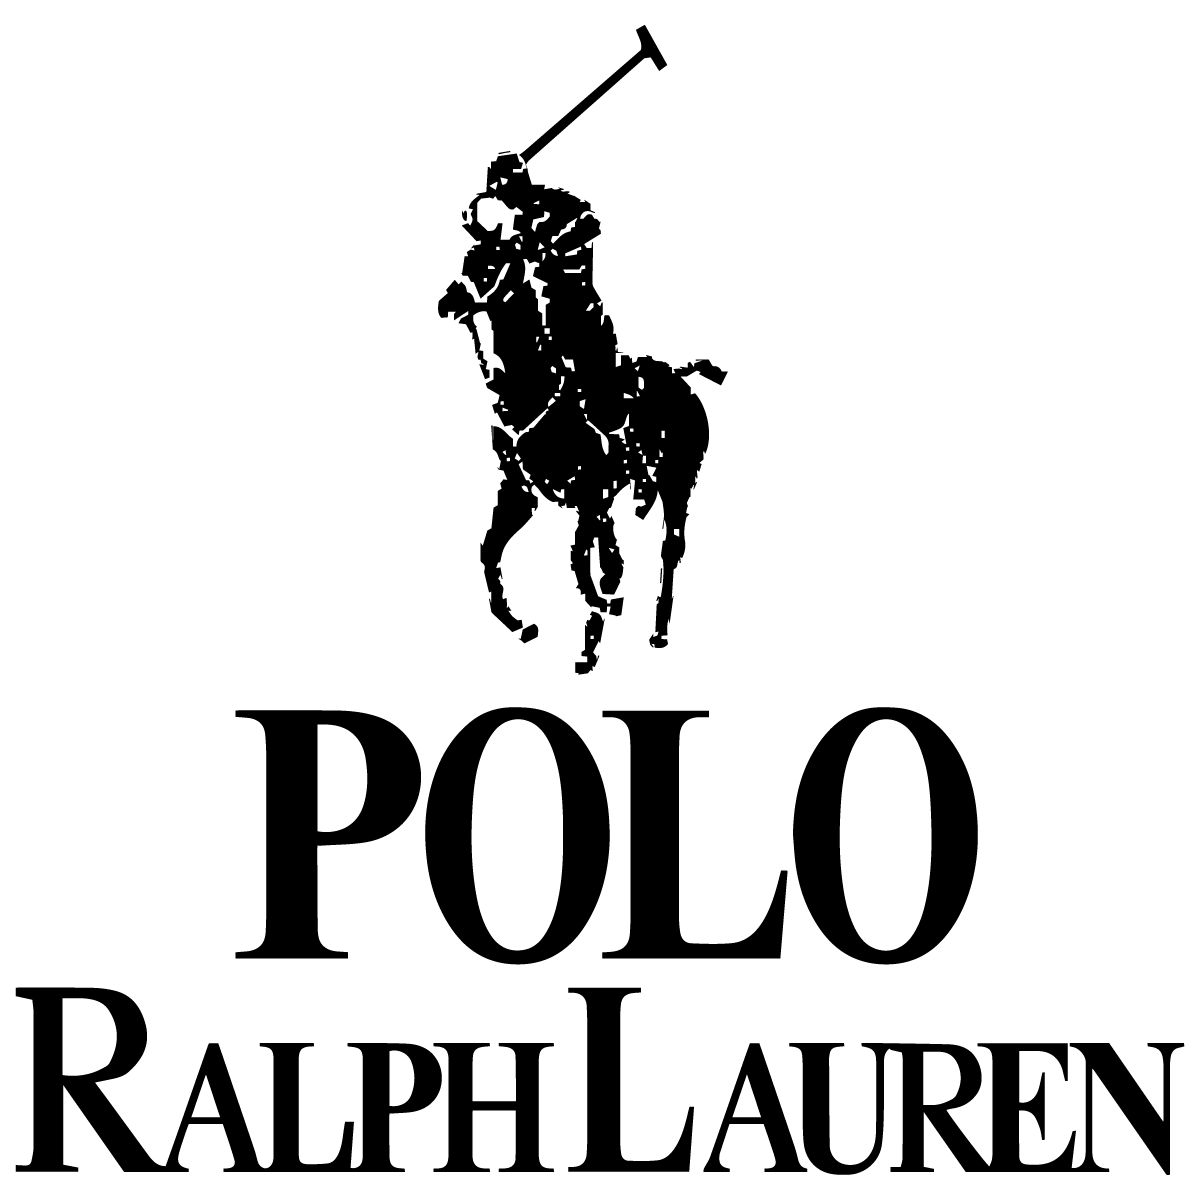 079_polo-ralph-lauren-logo-vector copy.png